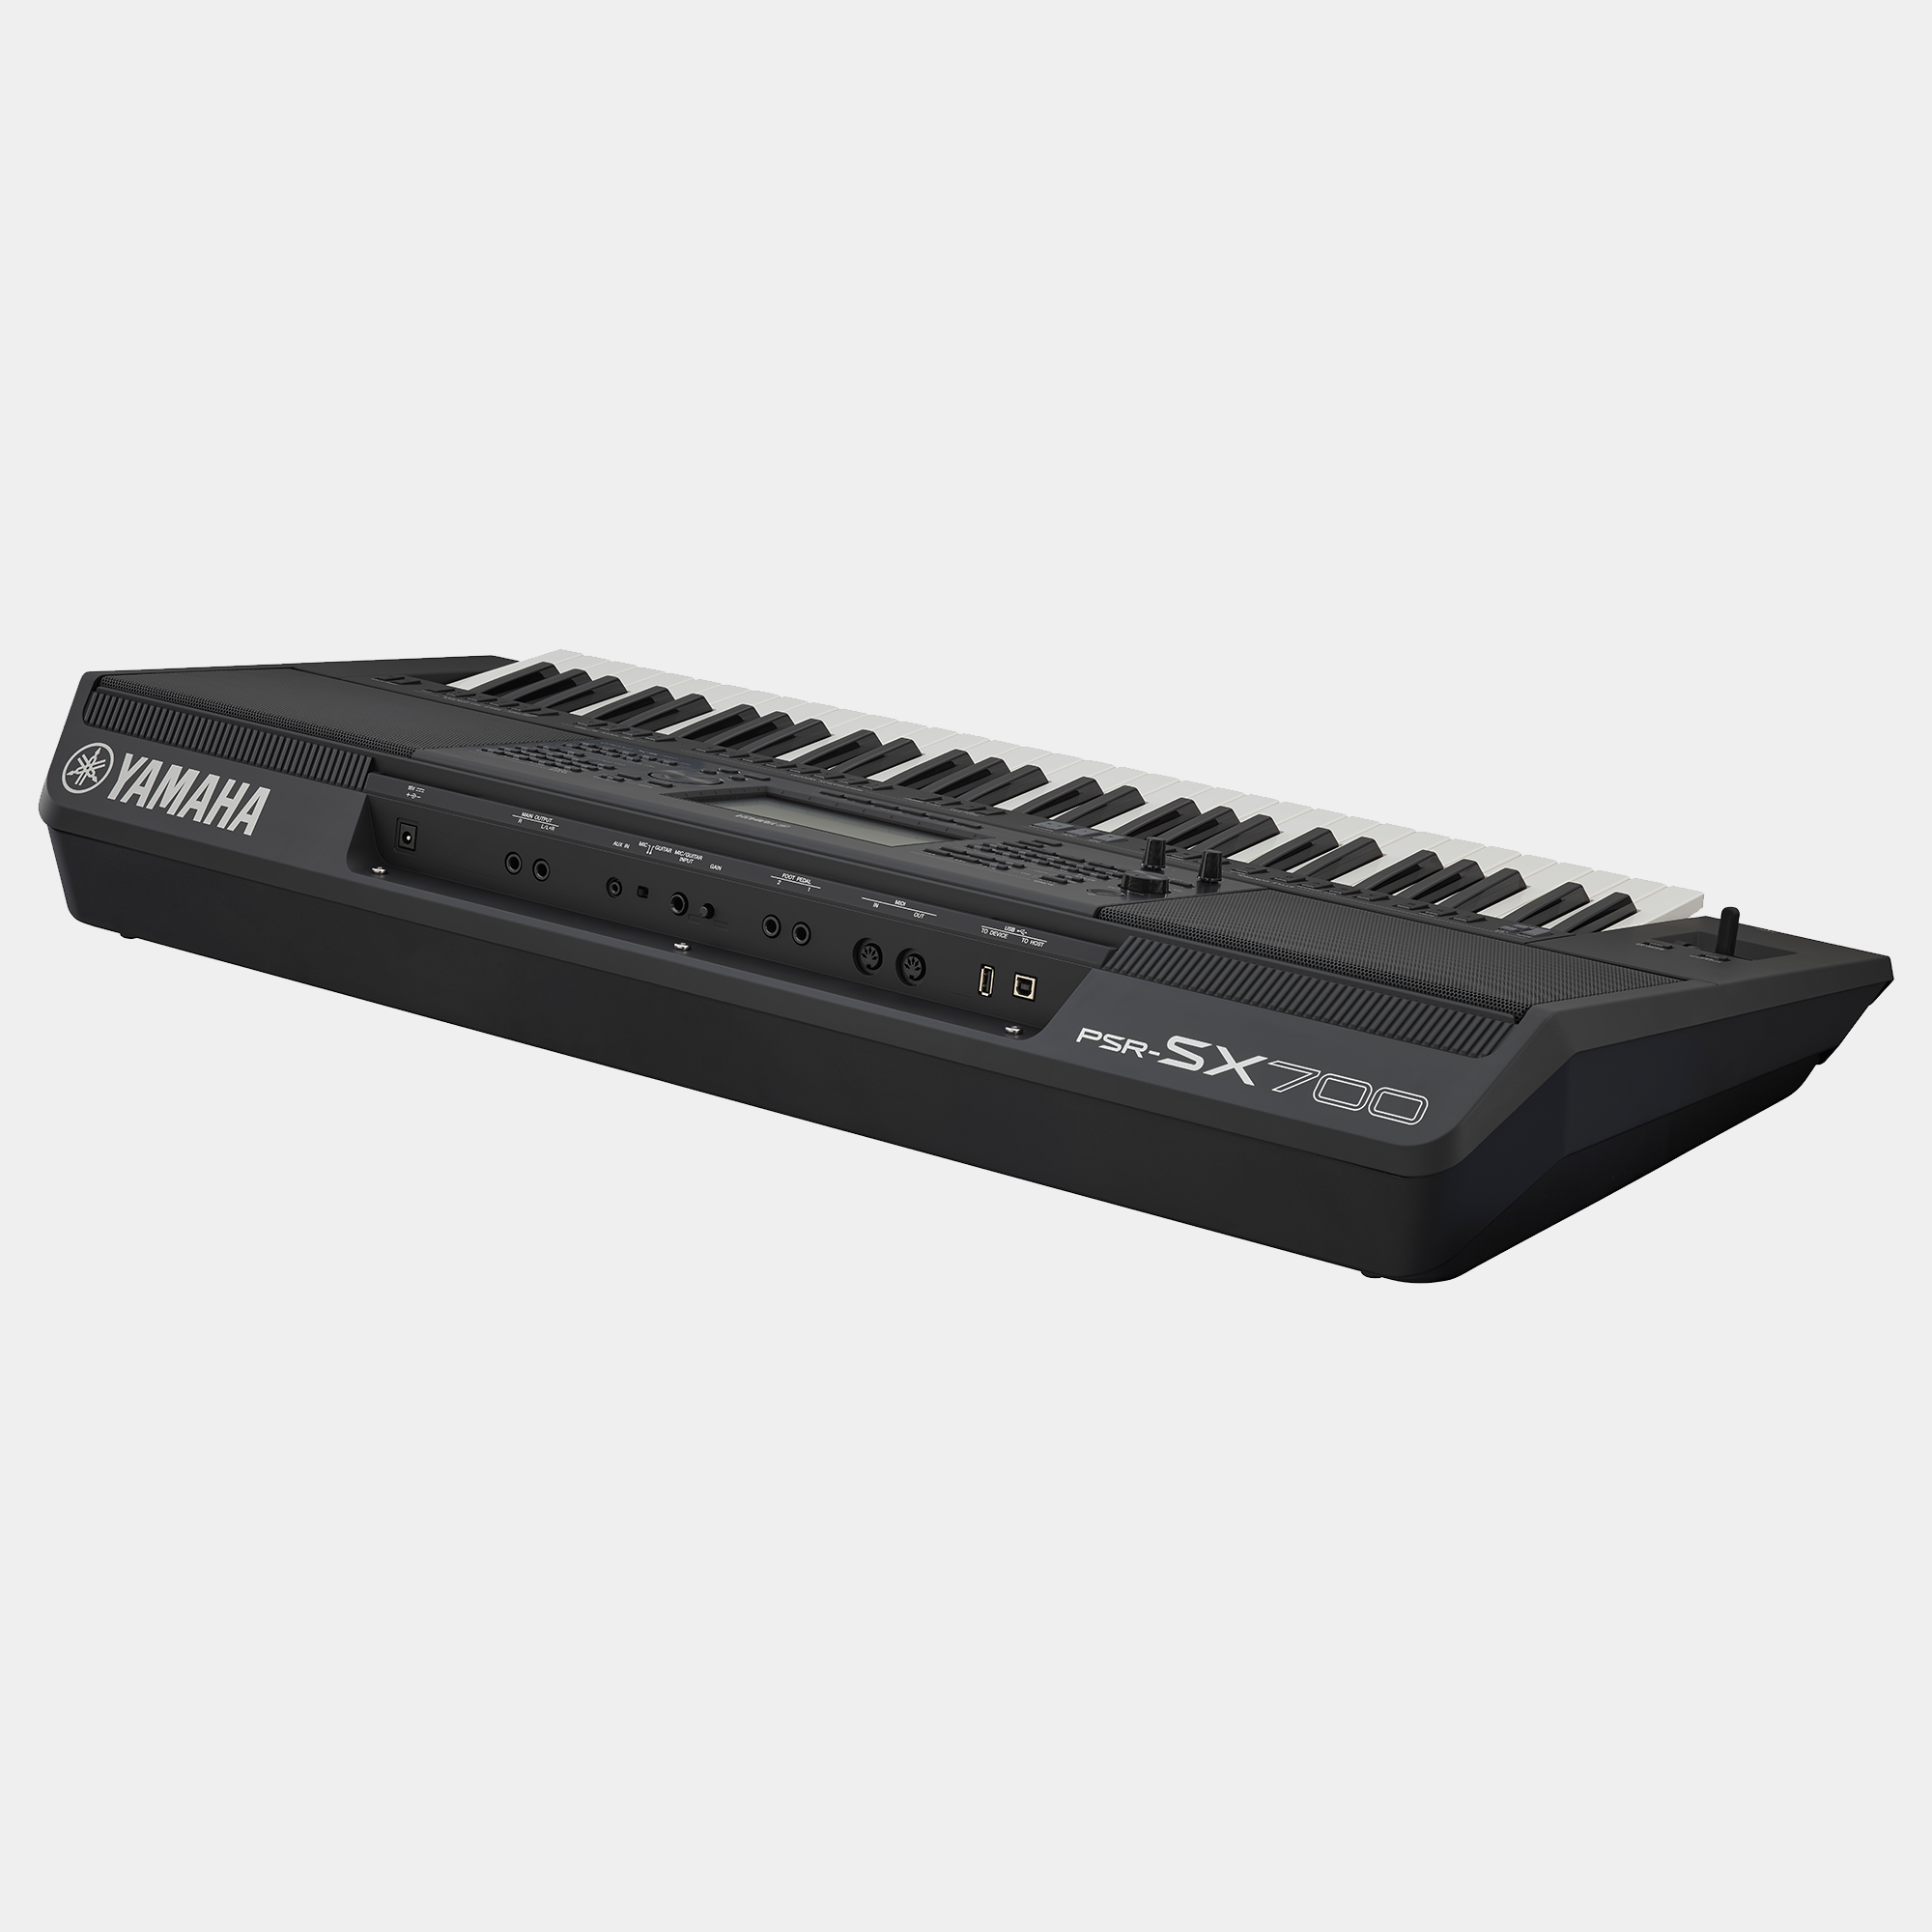  Yamaha PSRSX700 Synthesizer Arranger Workstation keyboard :  Musical Instruments